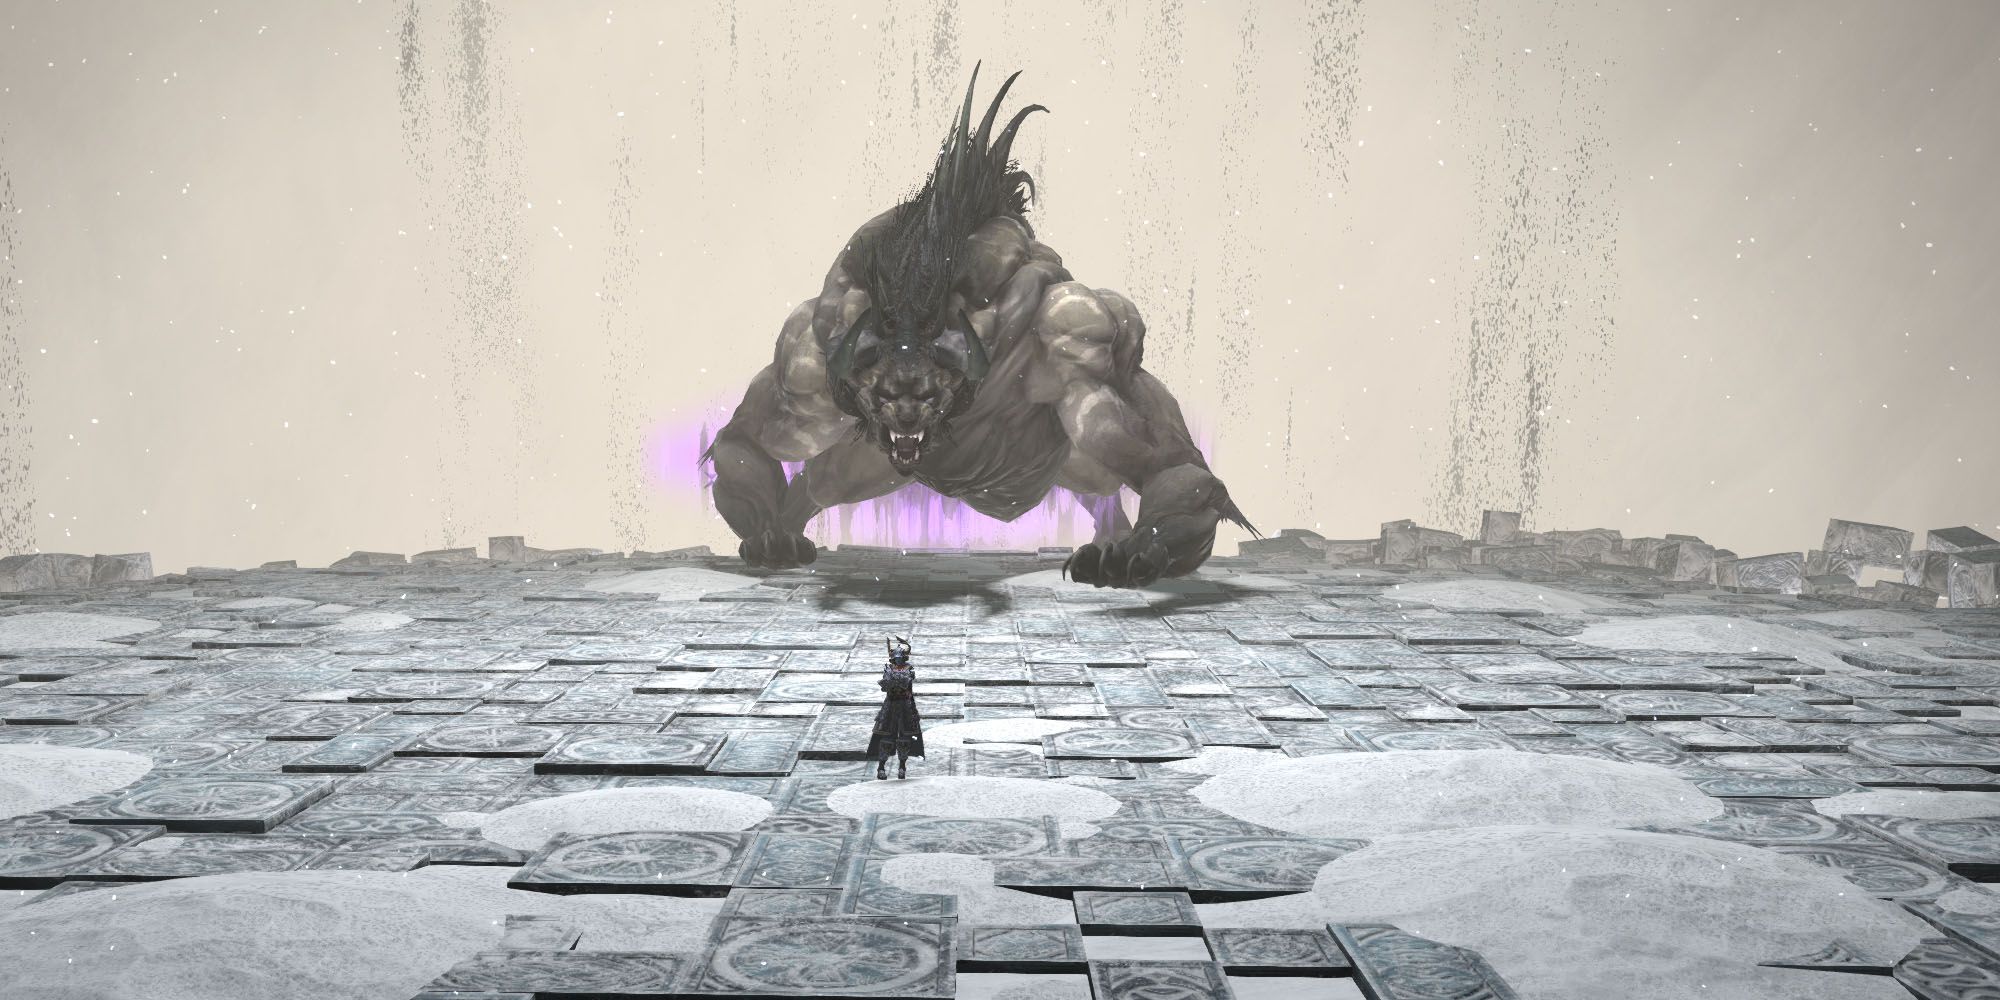 Final Fantasy 14 Angelus Demouns taking on Behemoth